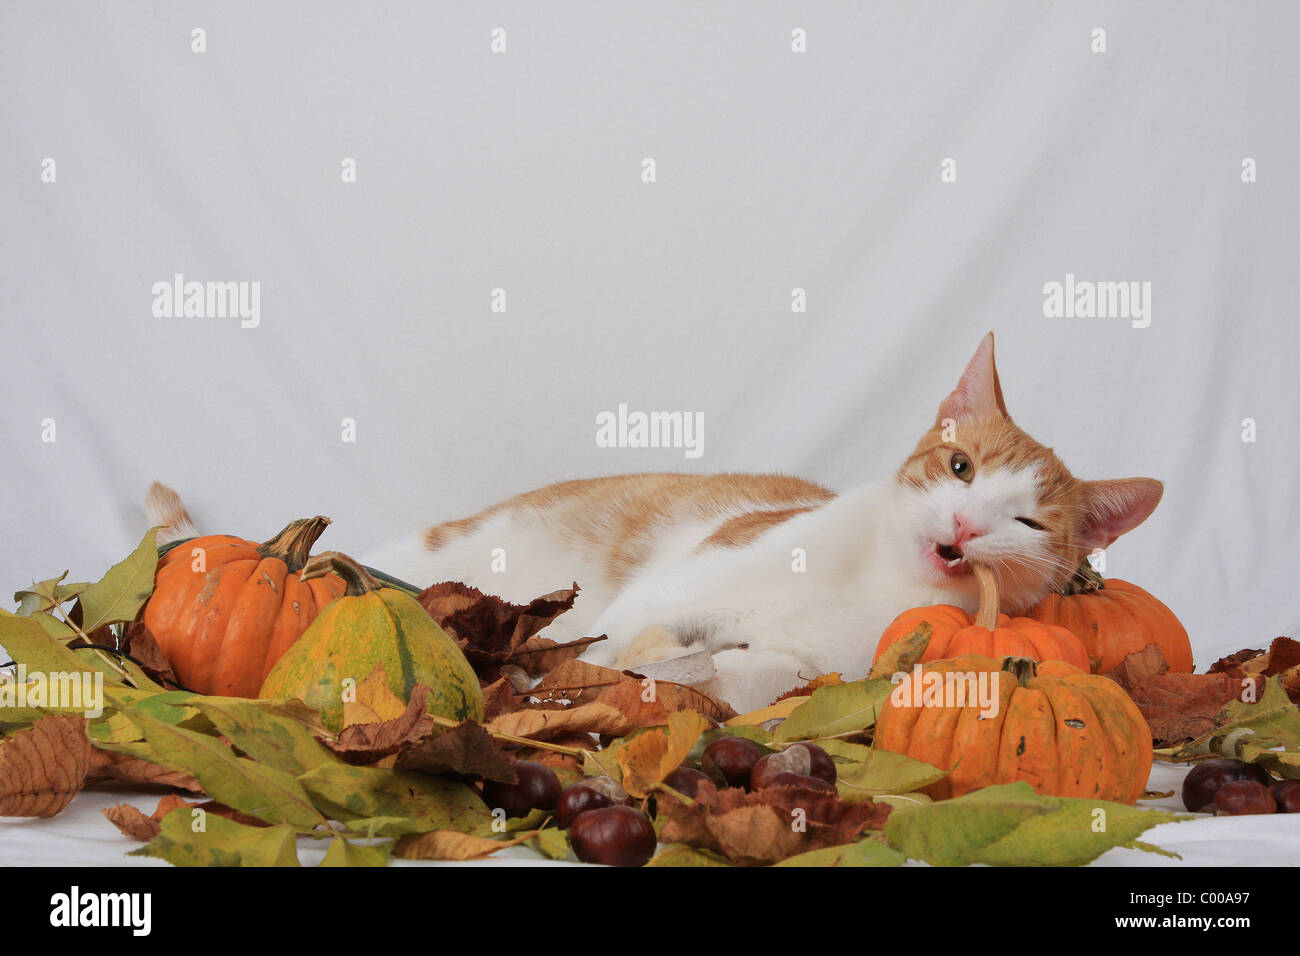 Hauskatze, knabbert an Kuerbis, Felis silvestris forma catus, Domestic-cat, nibbles on pumpkin Stock Photo